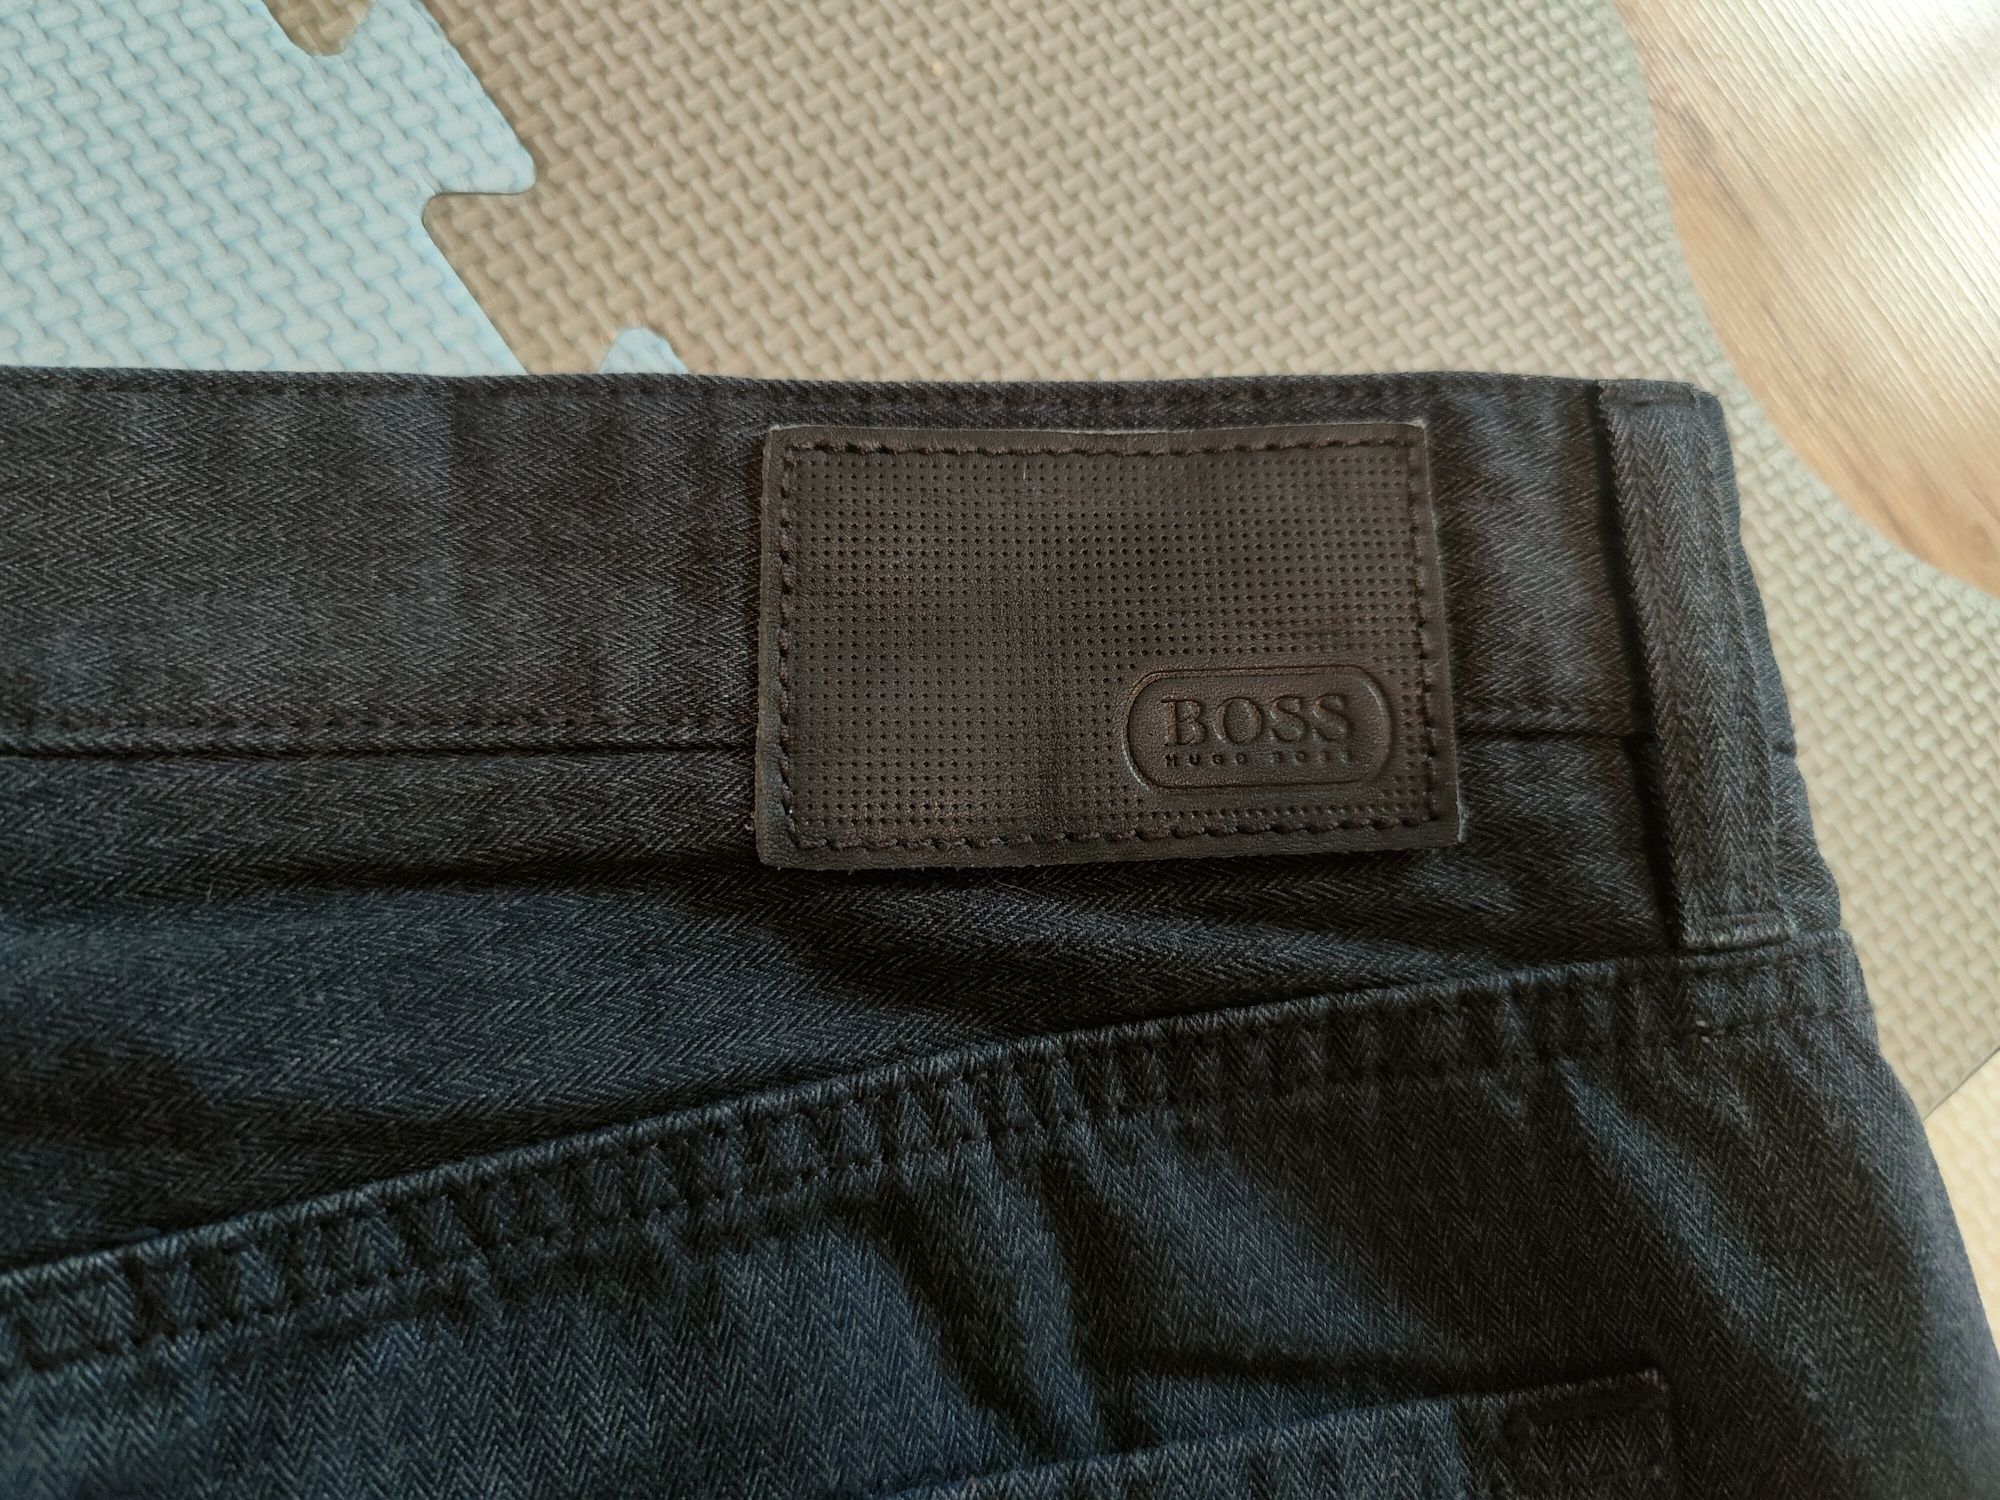 Spodnie hugo boss 33/34 jeans grafitowe ciemne szare